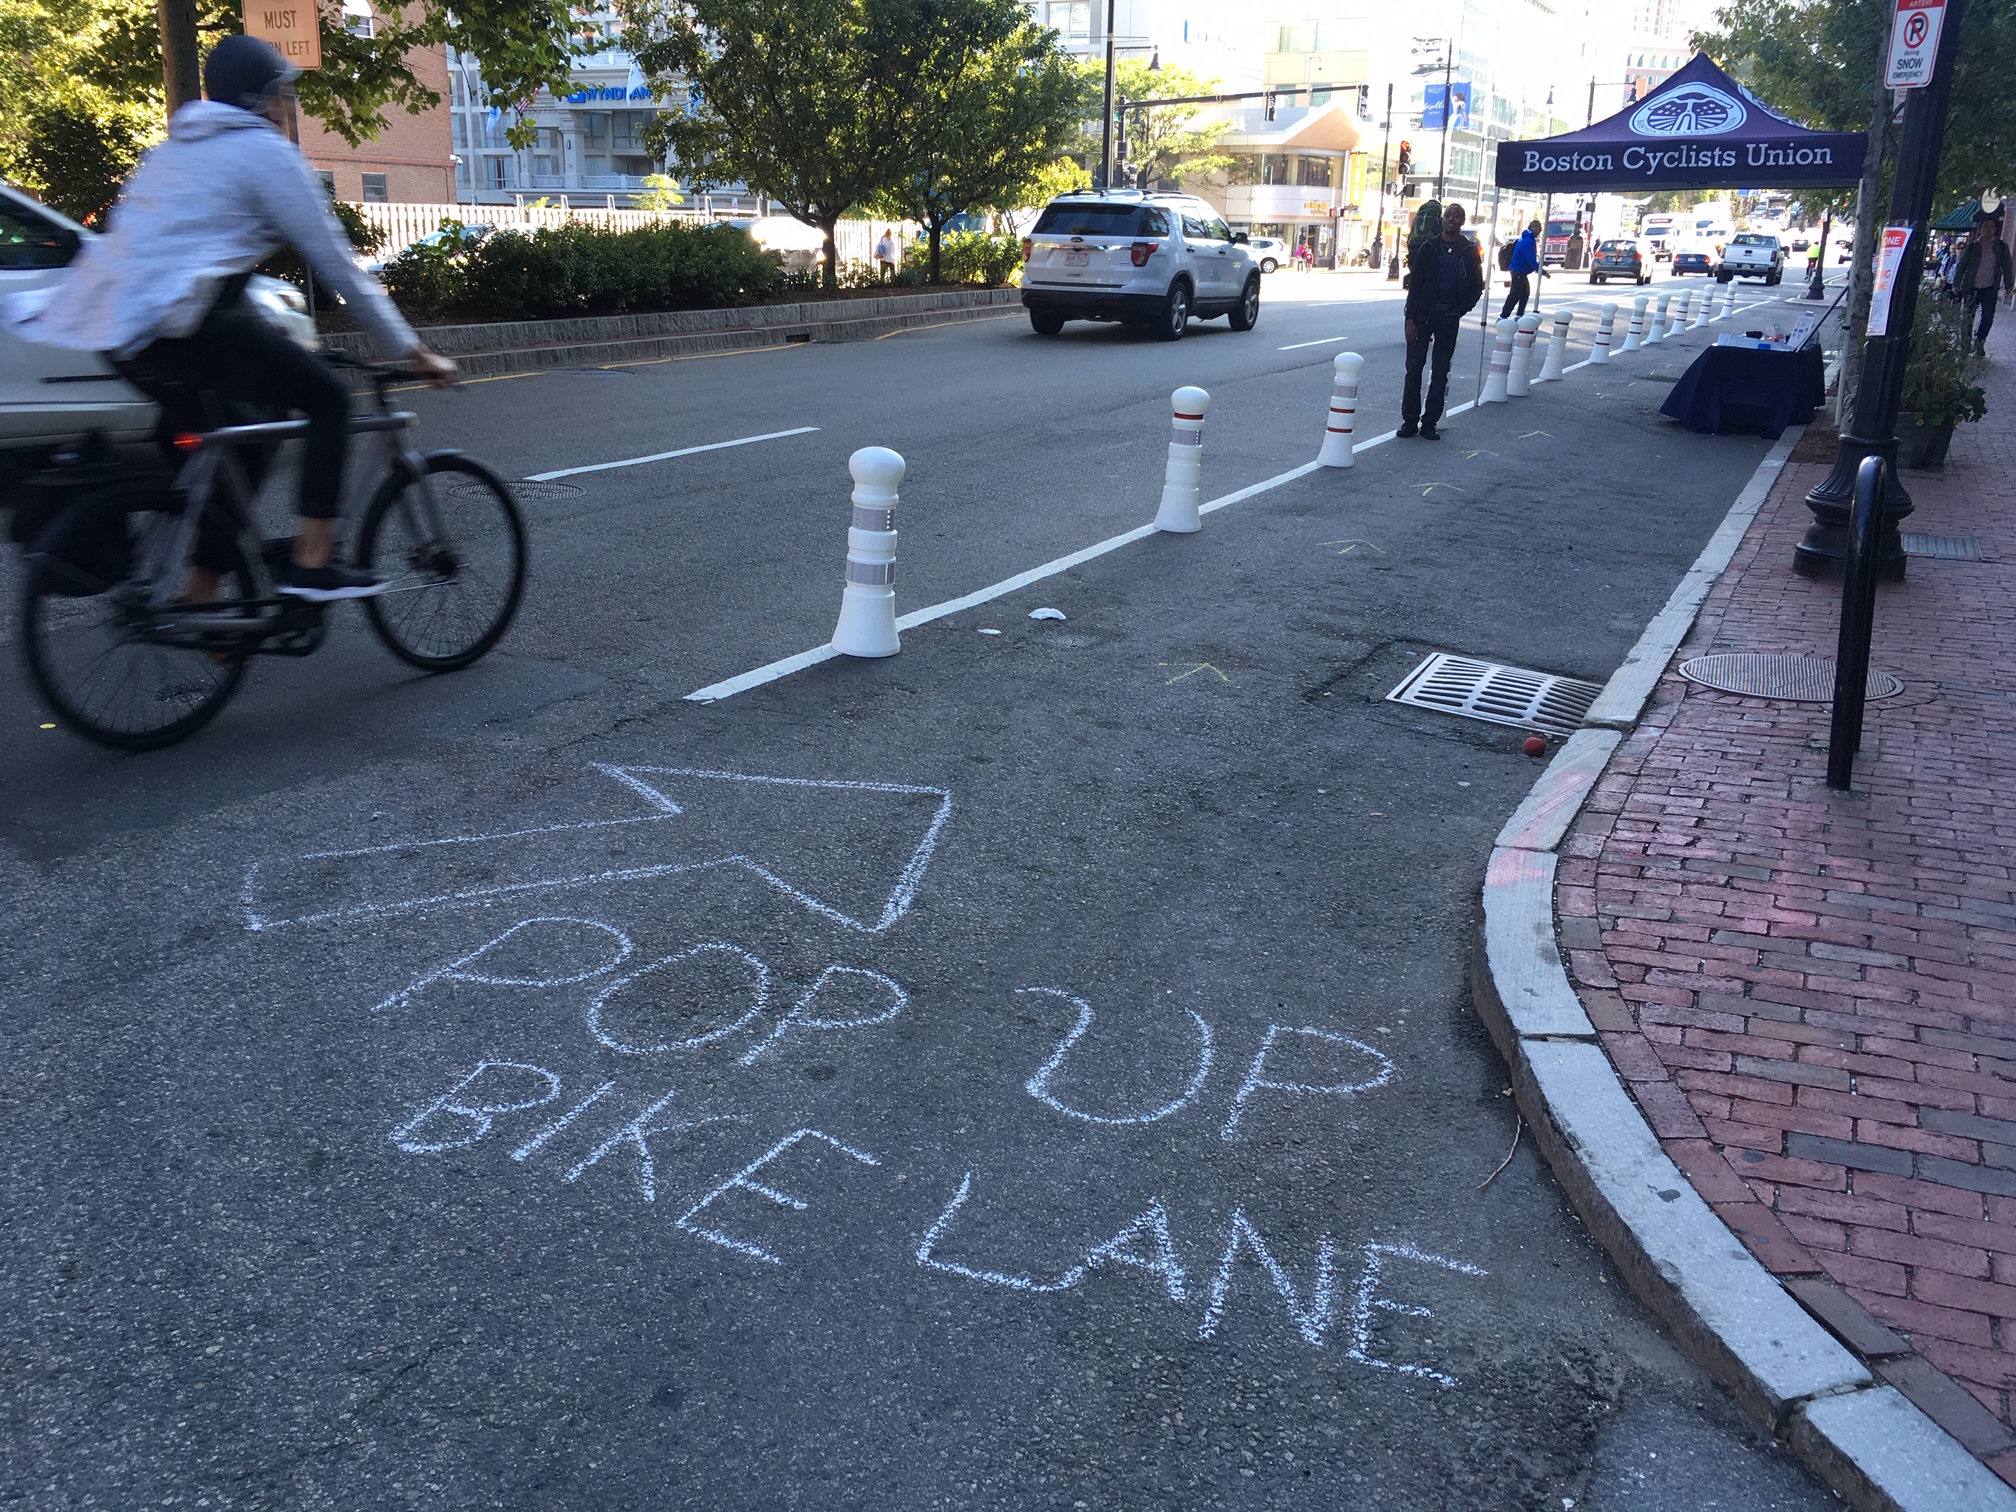 Parking(ing) Day 2019 on Cambridge Street in Boston